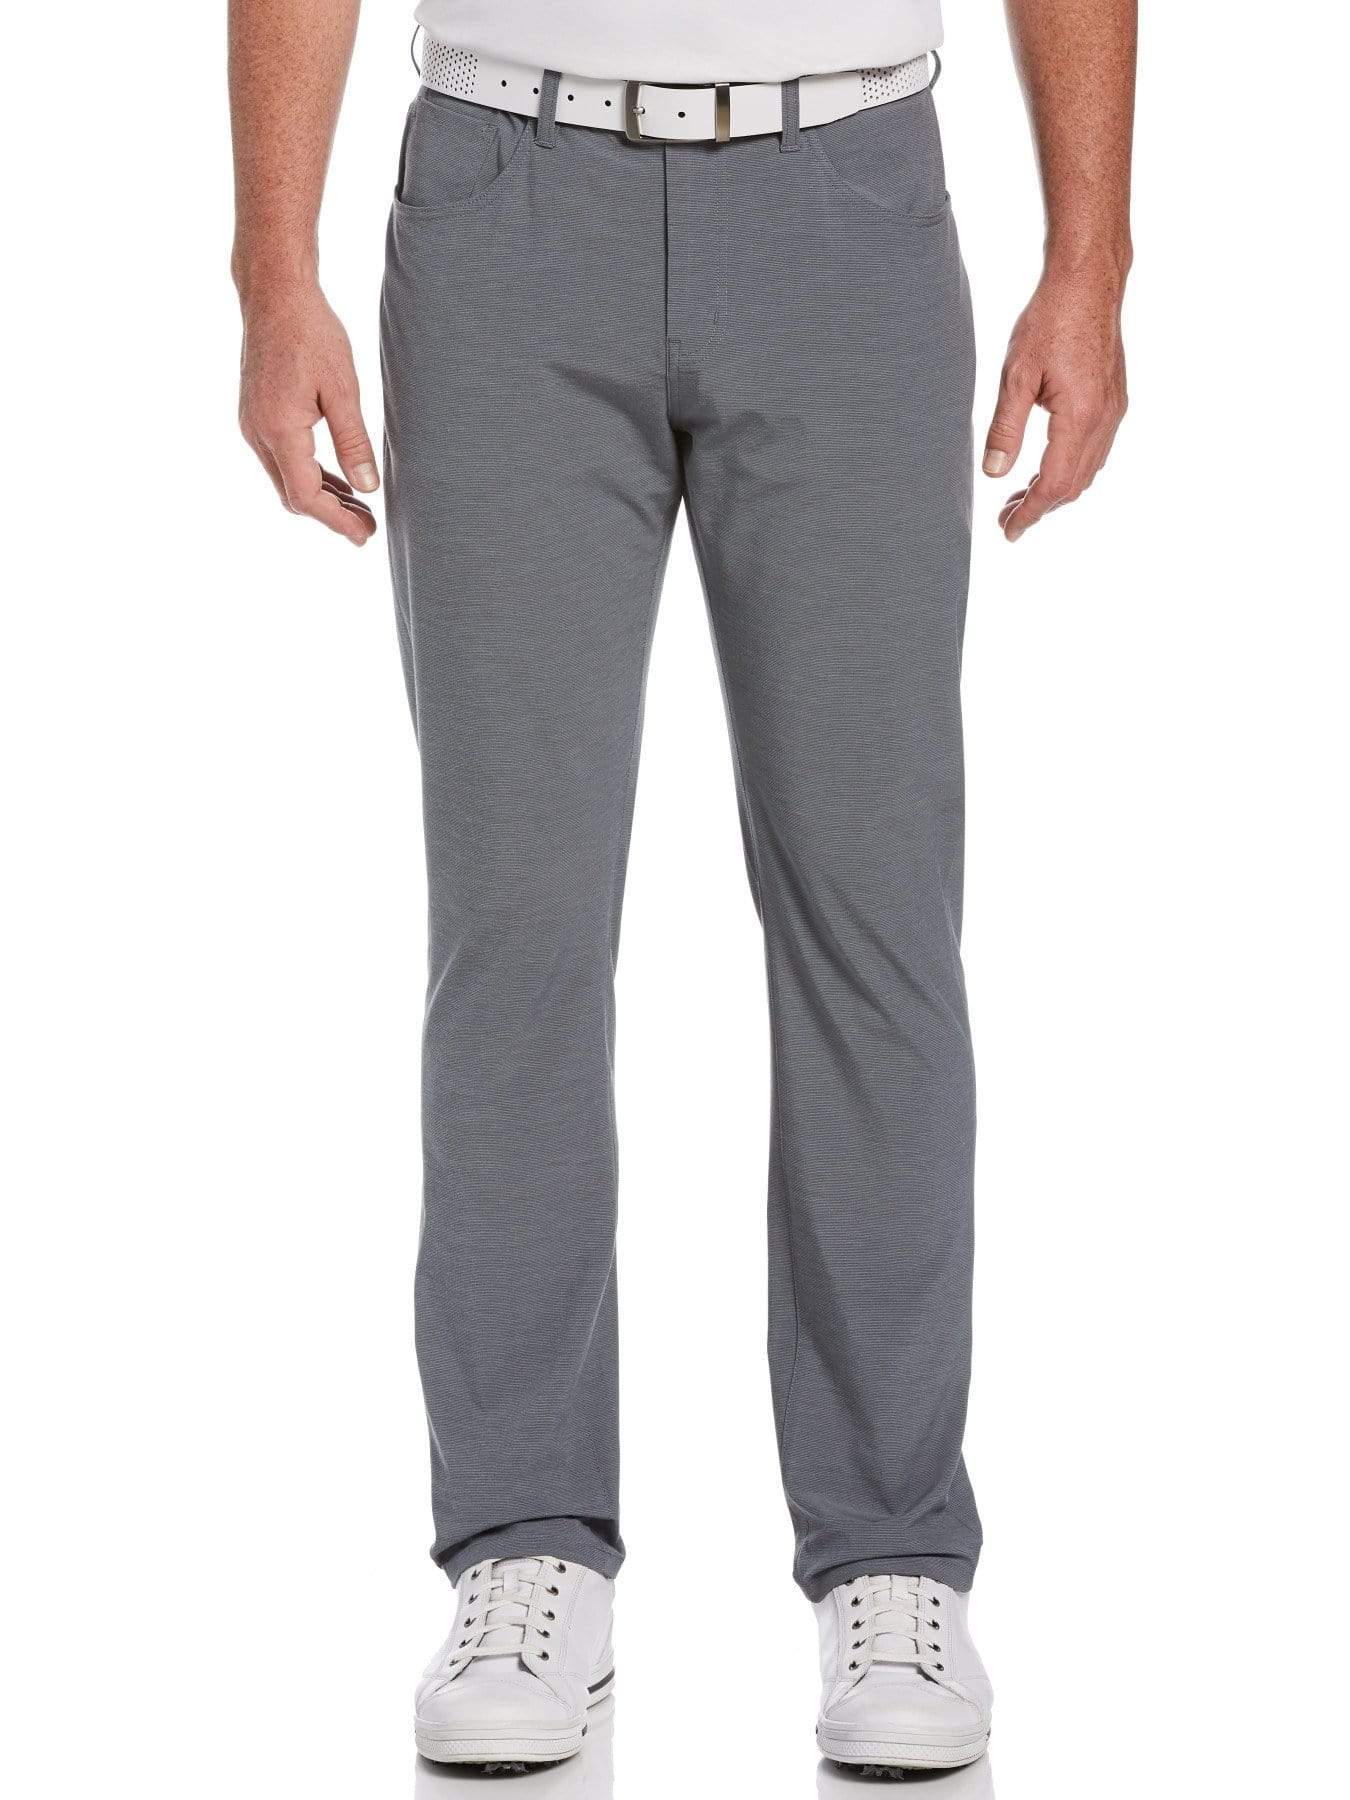 PGA TOUR Golf Pants Gray Men's Course Comfort 4-Way Stretch Size 36x32 NWT